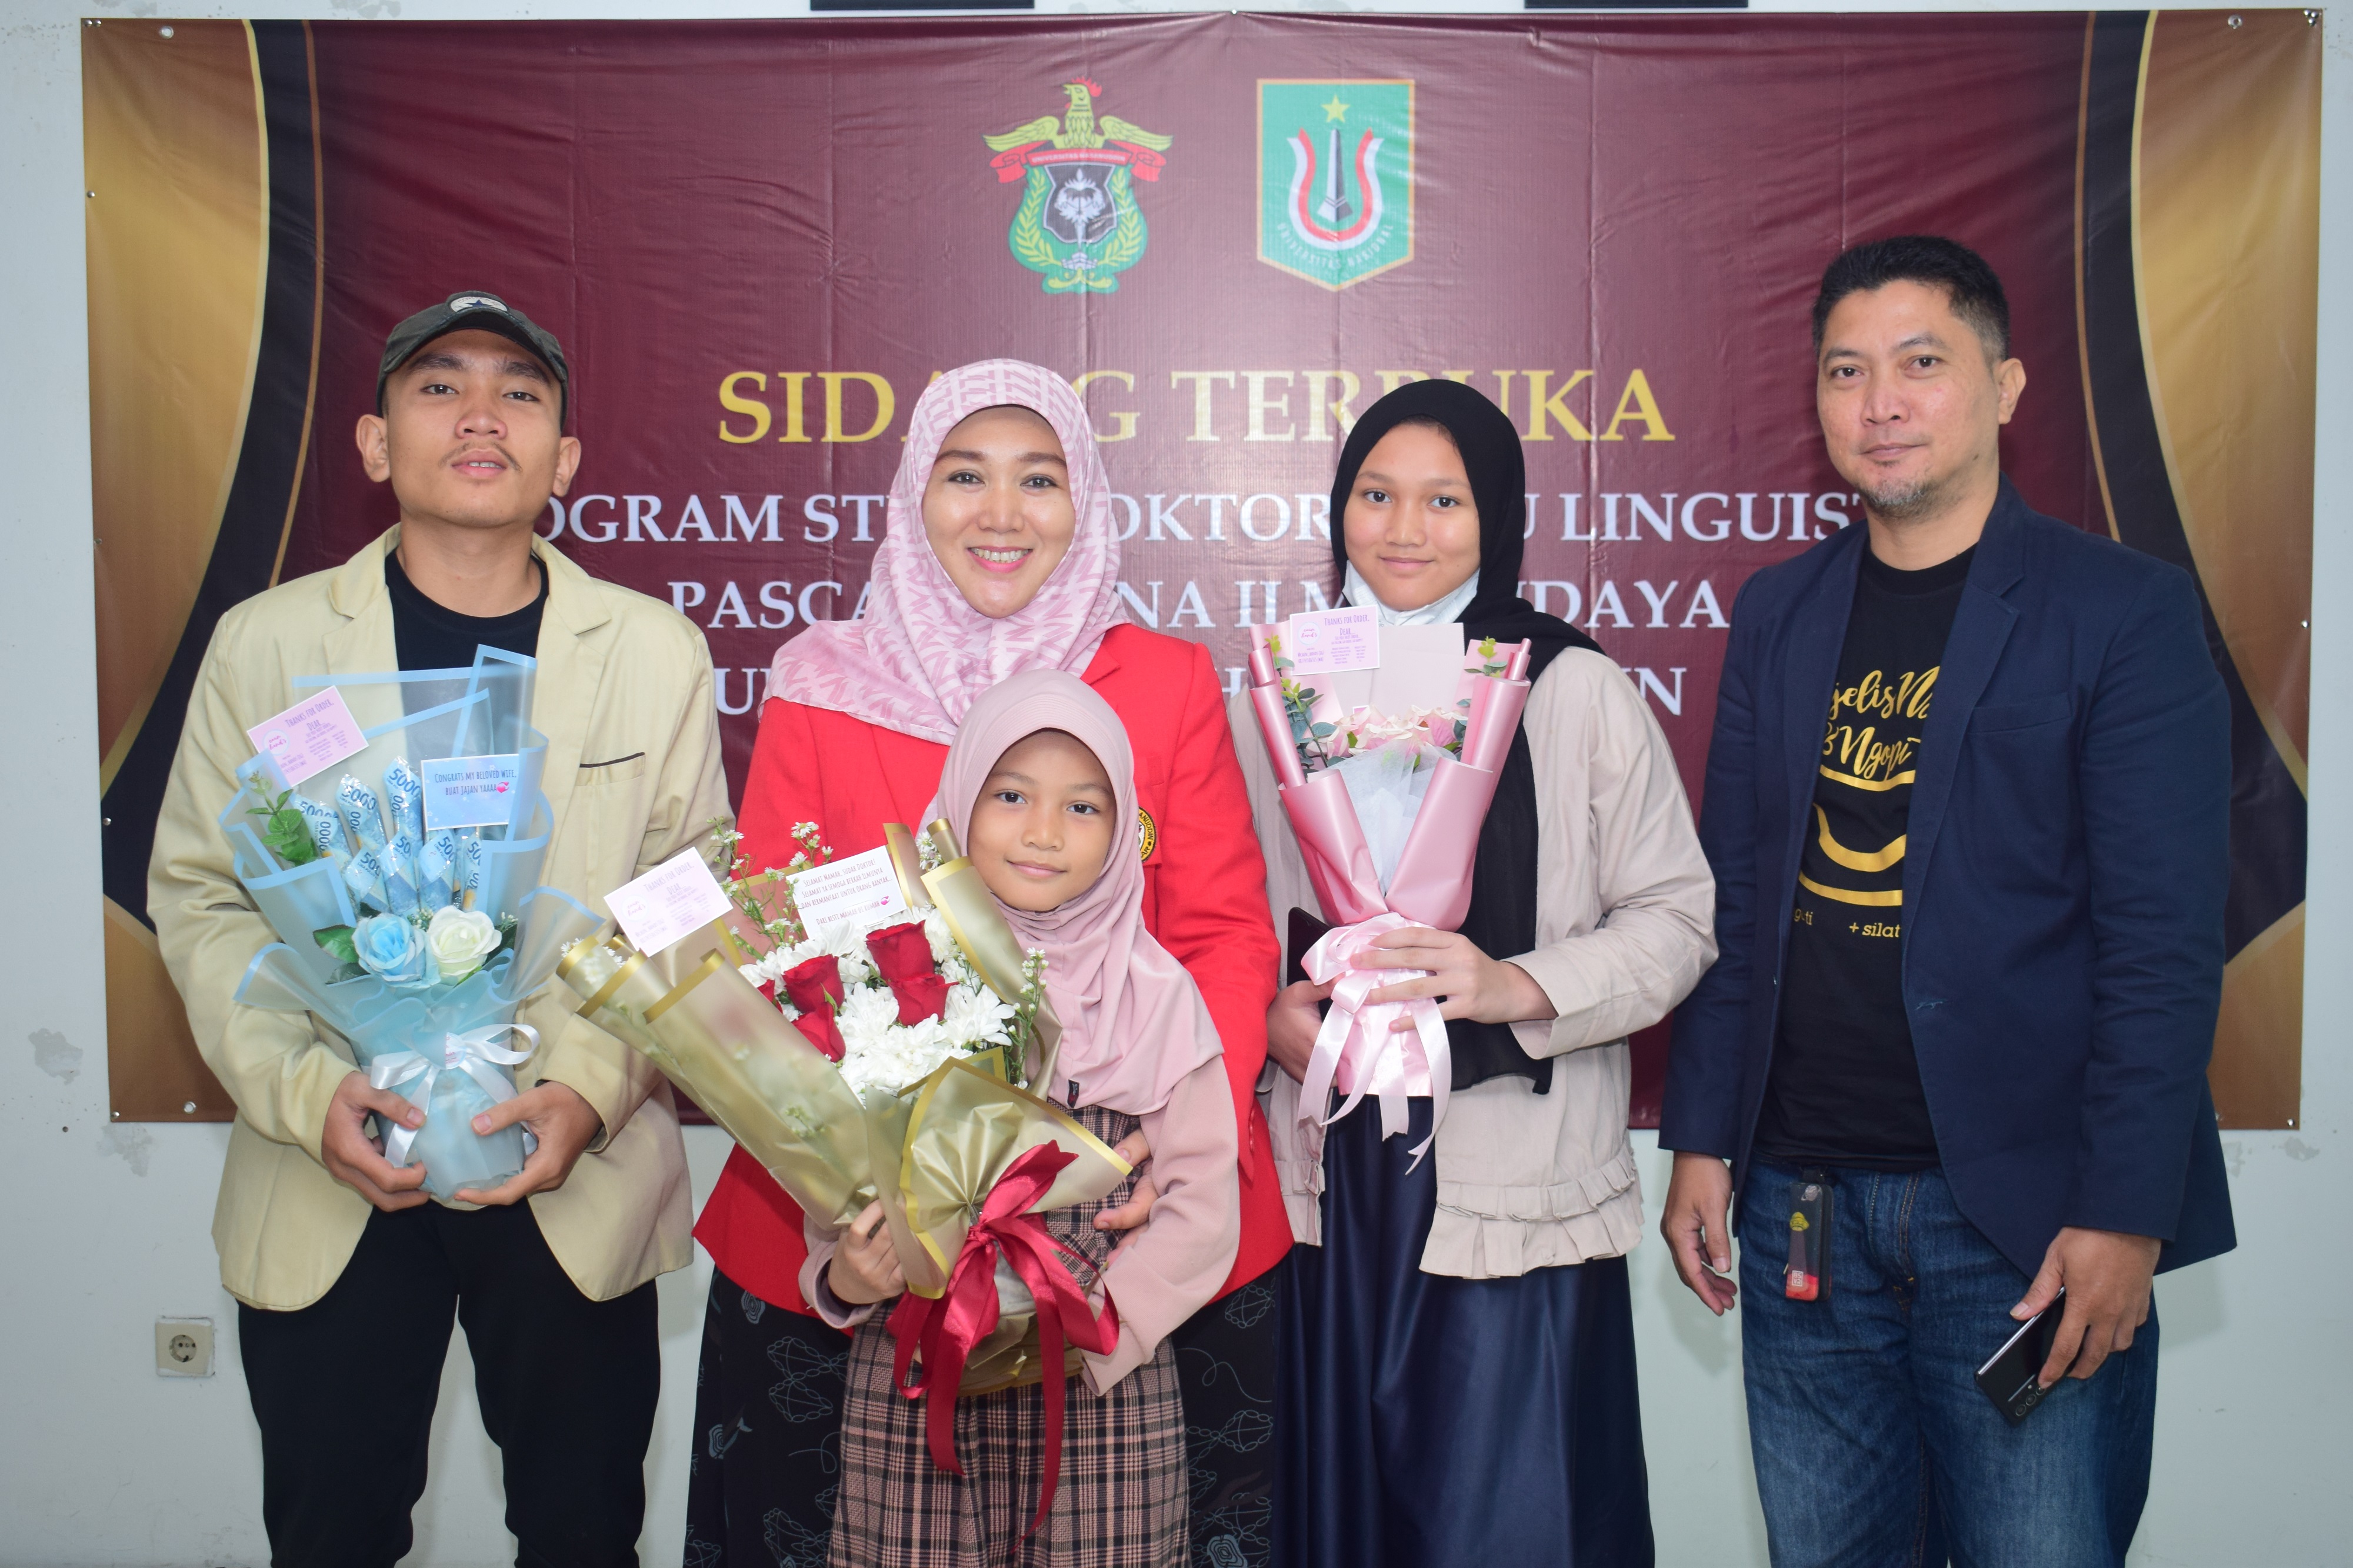 Dr.-Siti-Tuti-Alawiyah-S.S.-M.Hum-Foto-Bersama-Keluarga